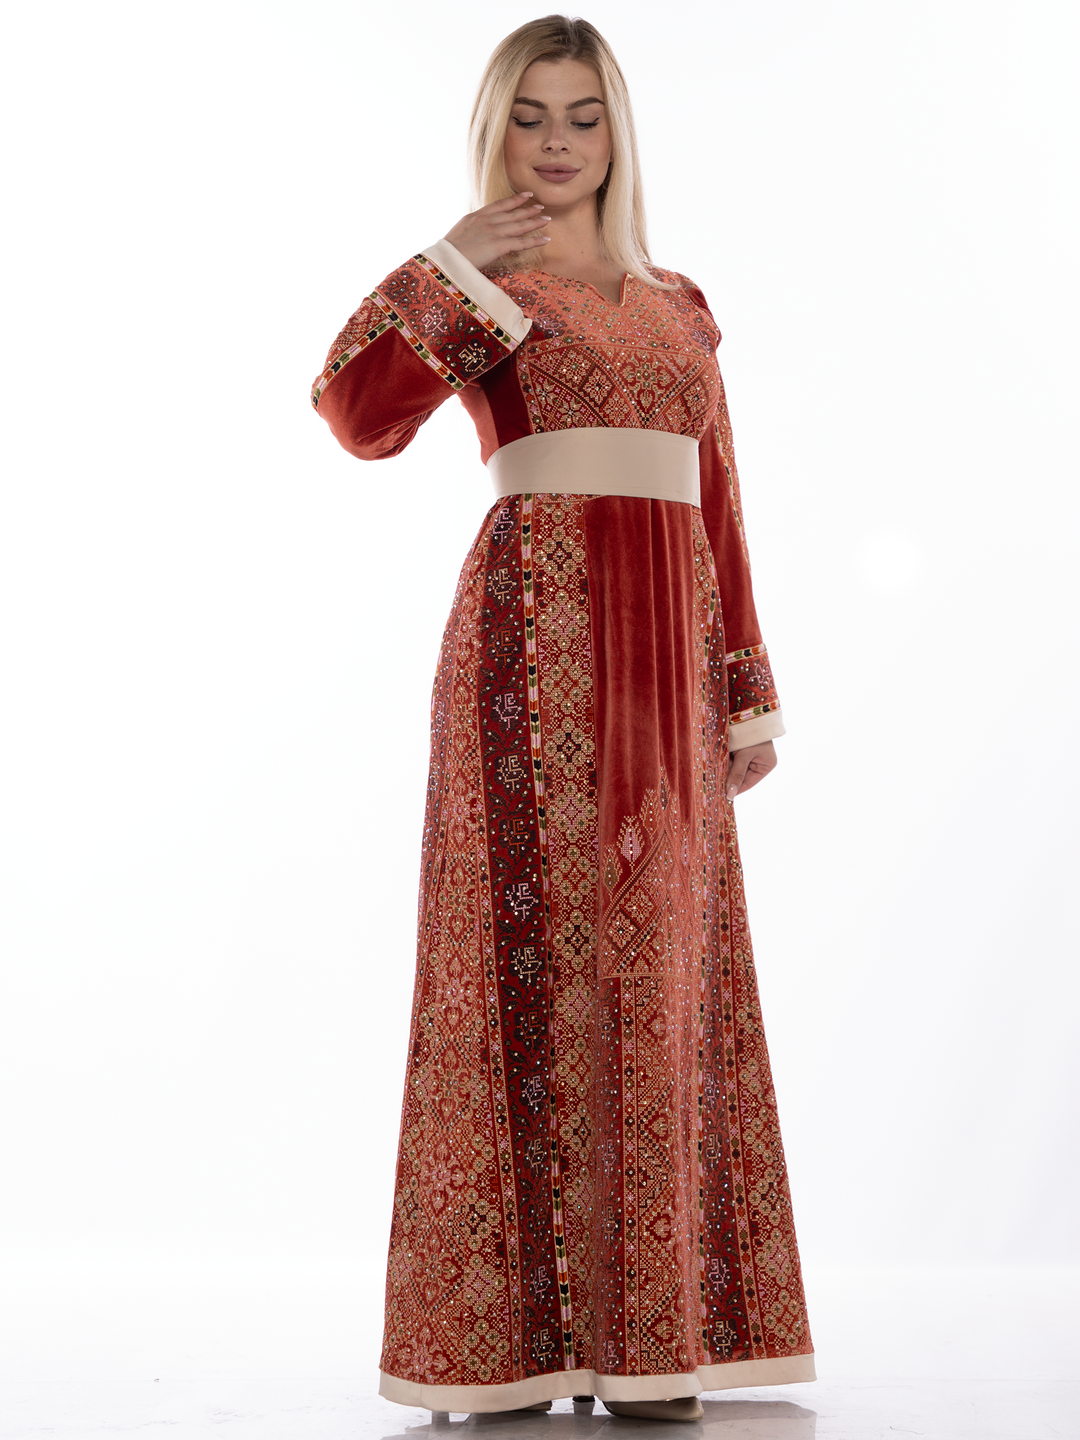 Jenin Velvet Beauty - High Quality Traditional Embroidered Palestinian Thobe